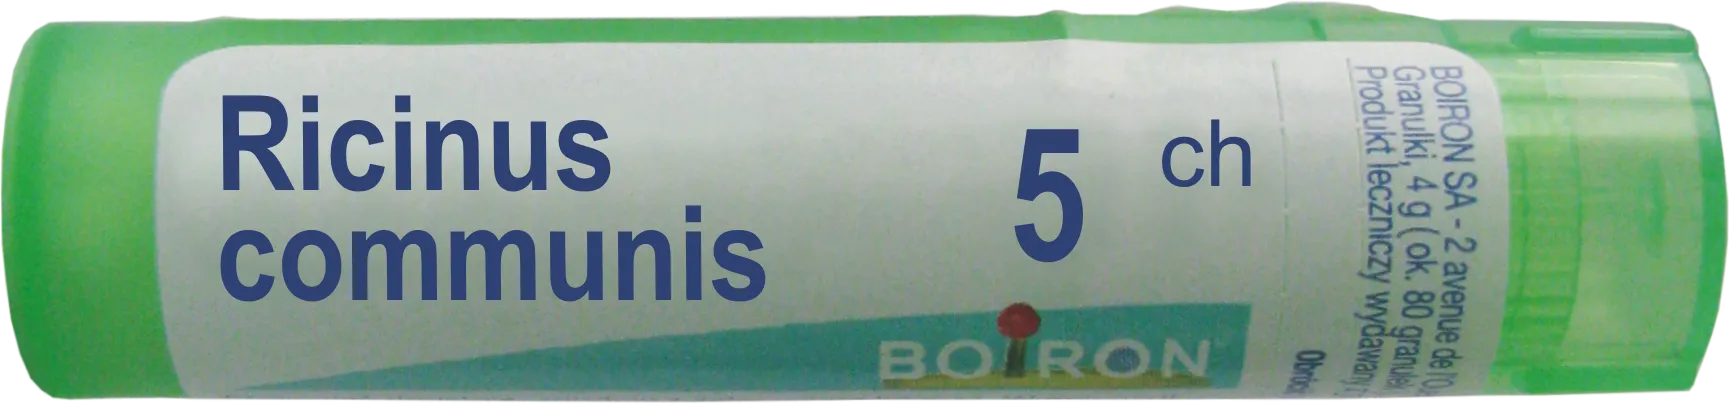 Boiron Ricinus communis 5 CH, granulki, 4 g